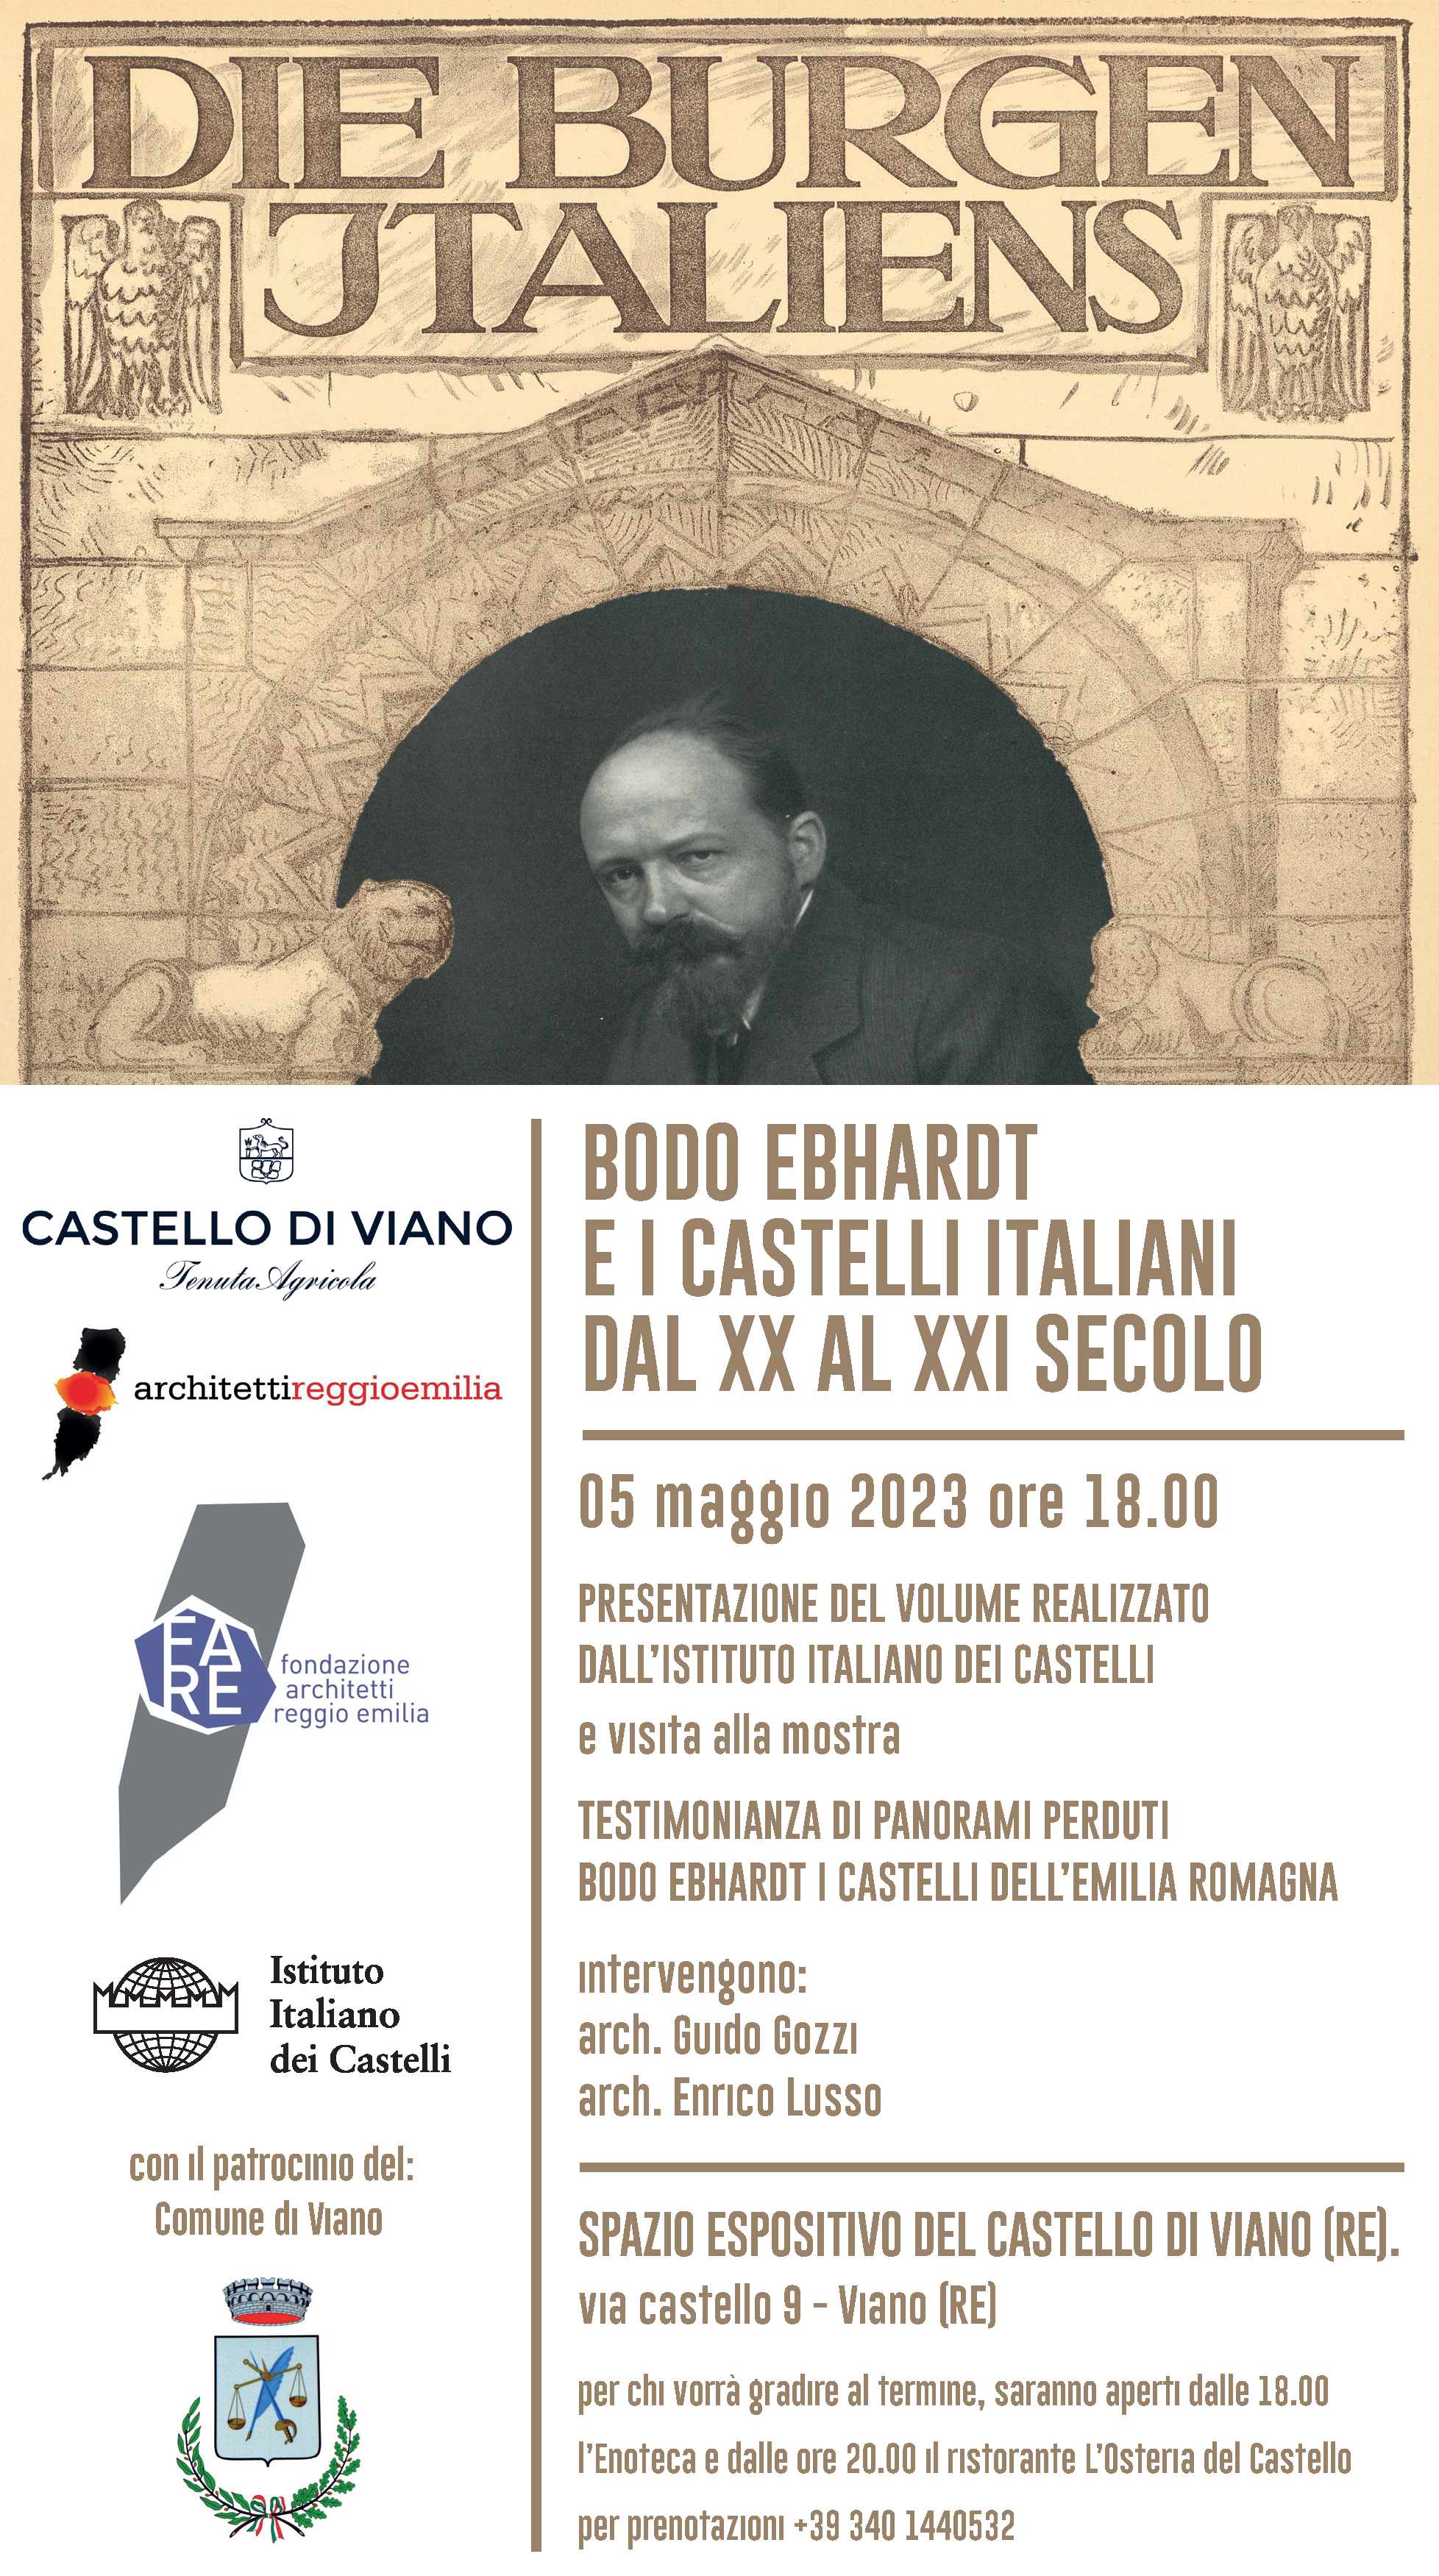 Bodo Ebhardt e i Castelli Italiani dal XX al XXI secolo